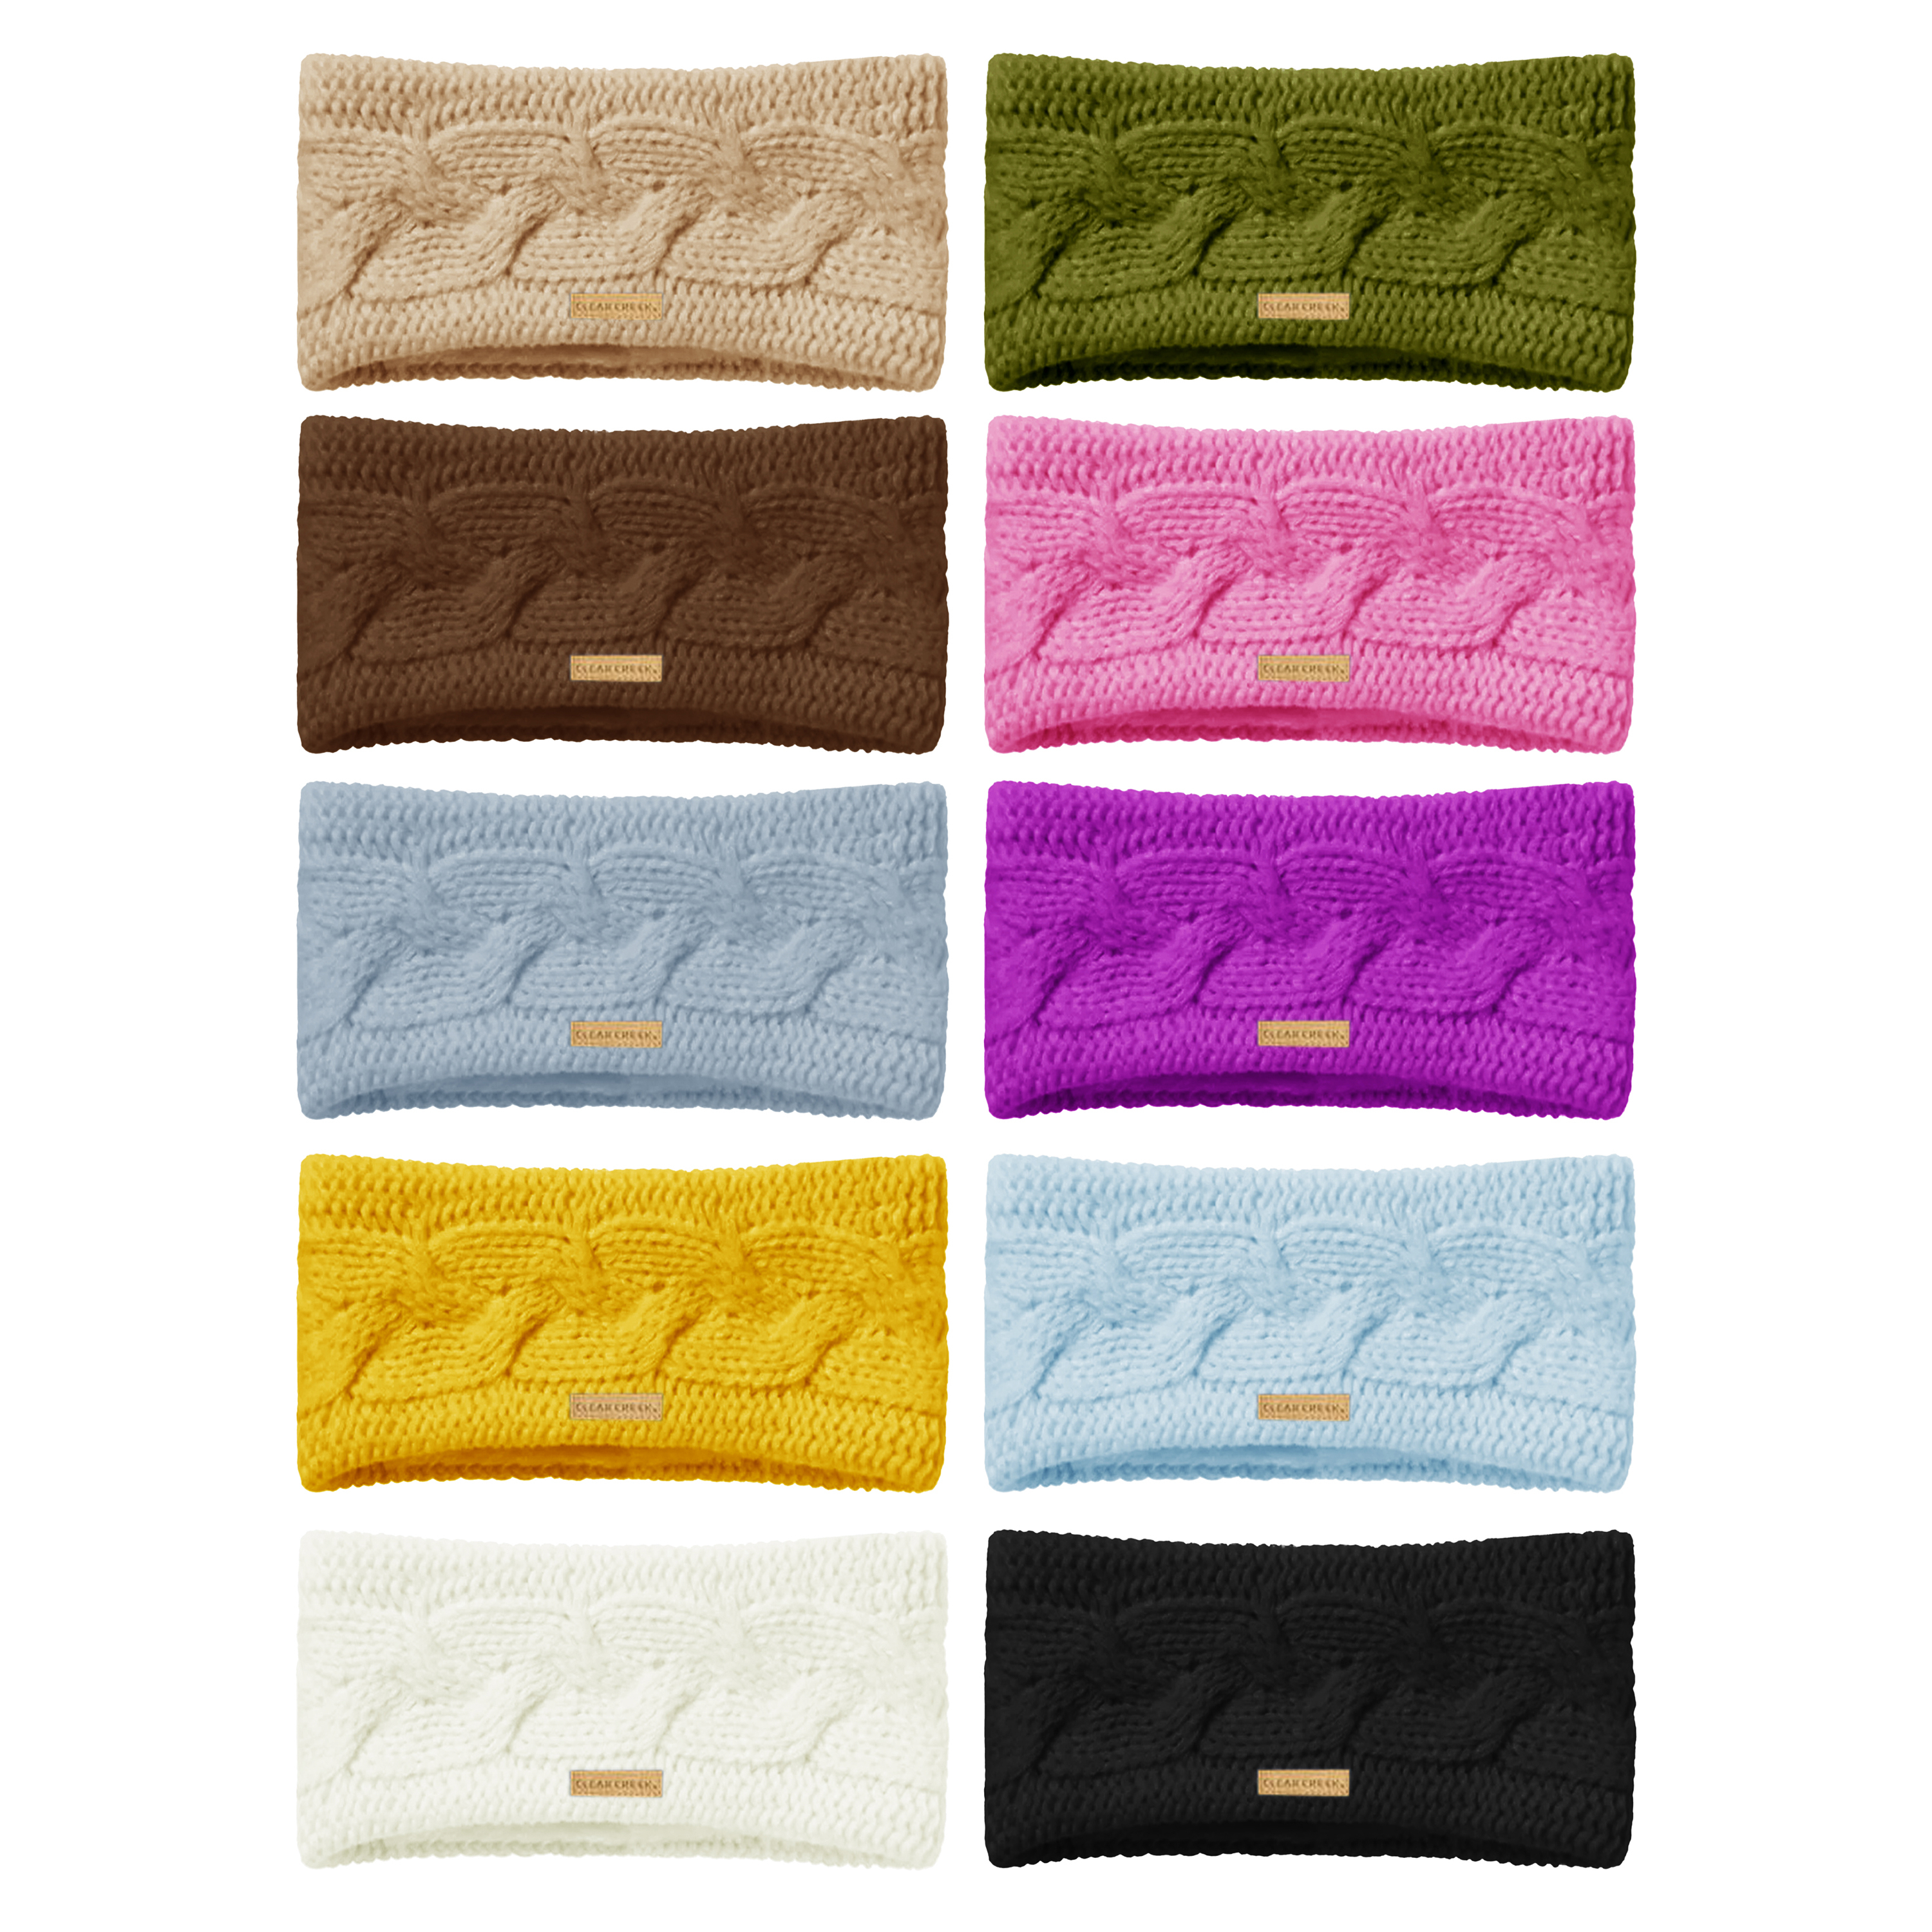 3-Pack: Womens Ultra-Soft Cozy Polar Fleece Lined Cable Knit Popcorn Stitch Headband - Black